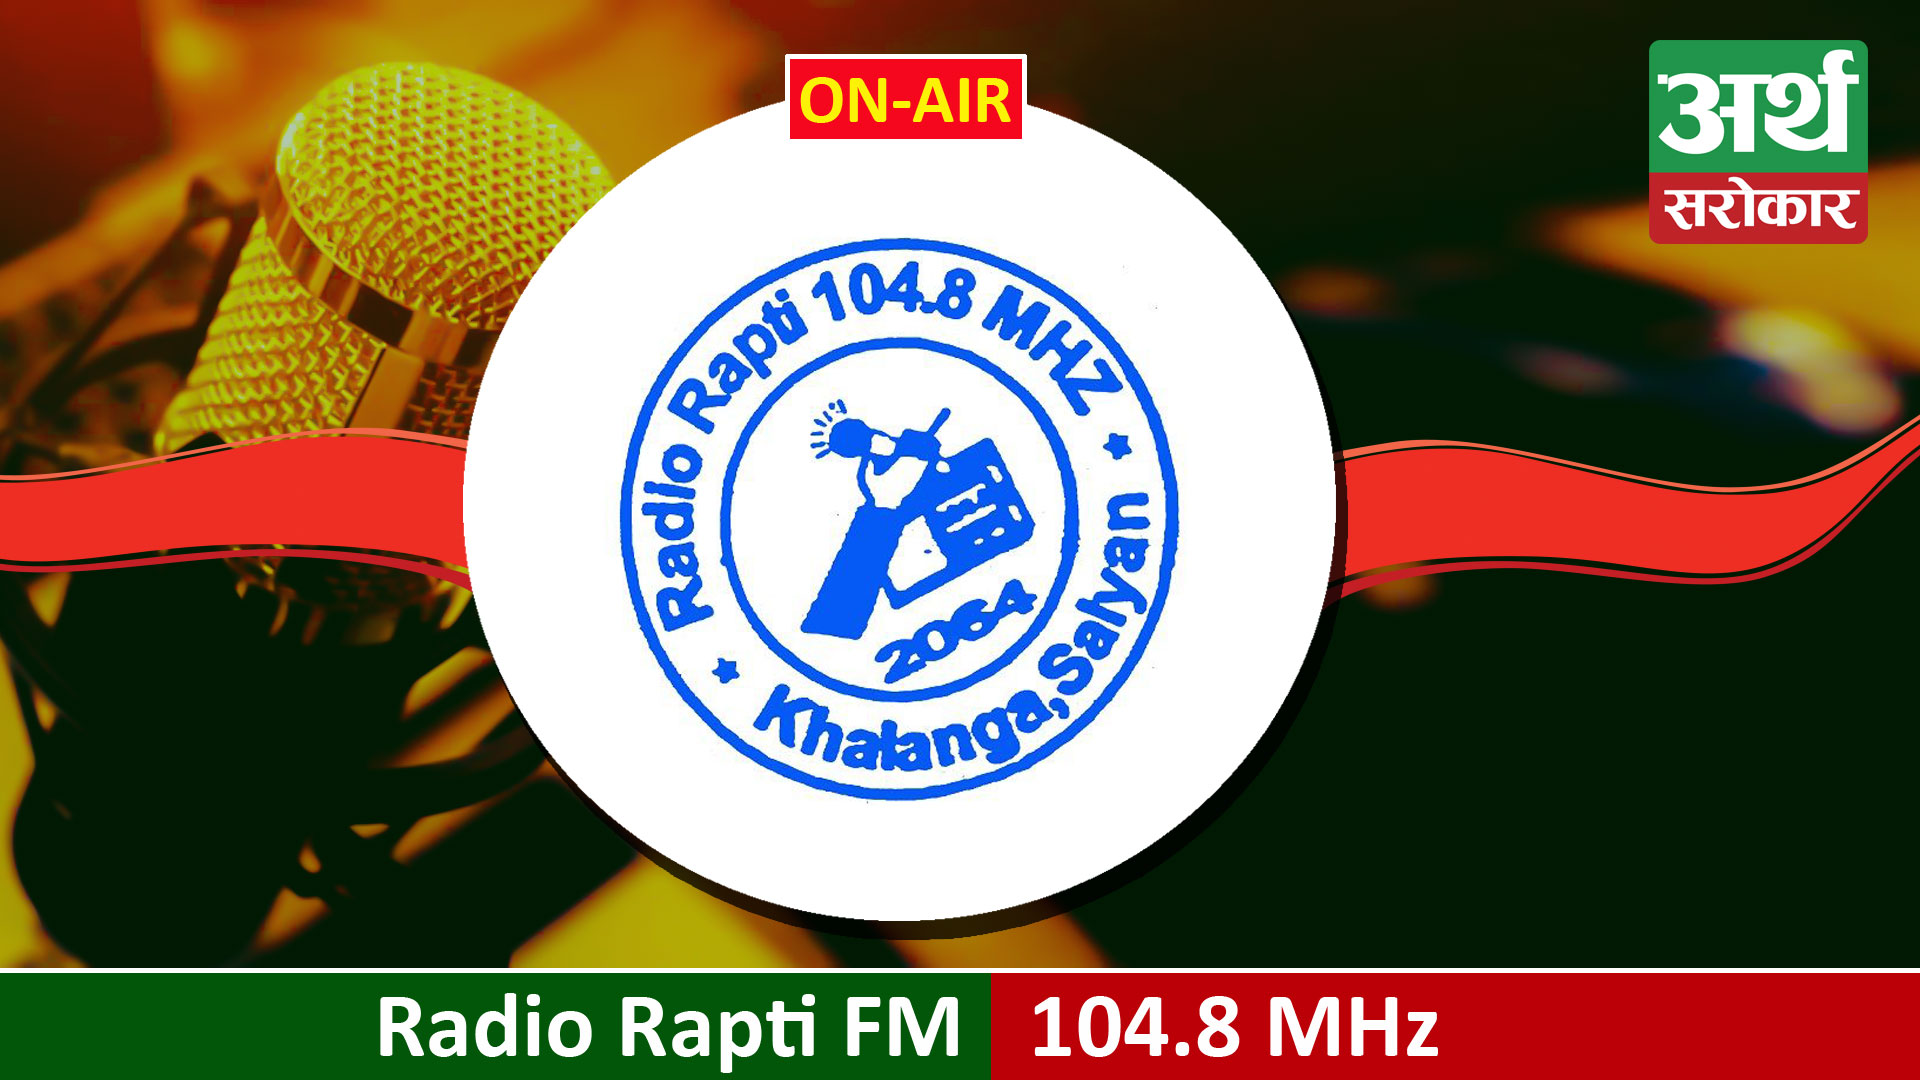 Radio Rapti FM 104.8 MHz